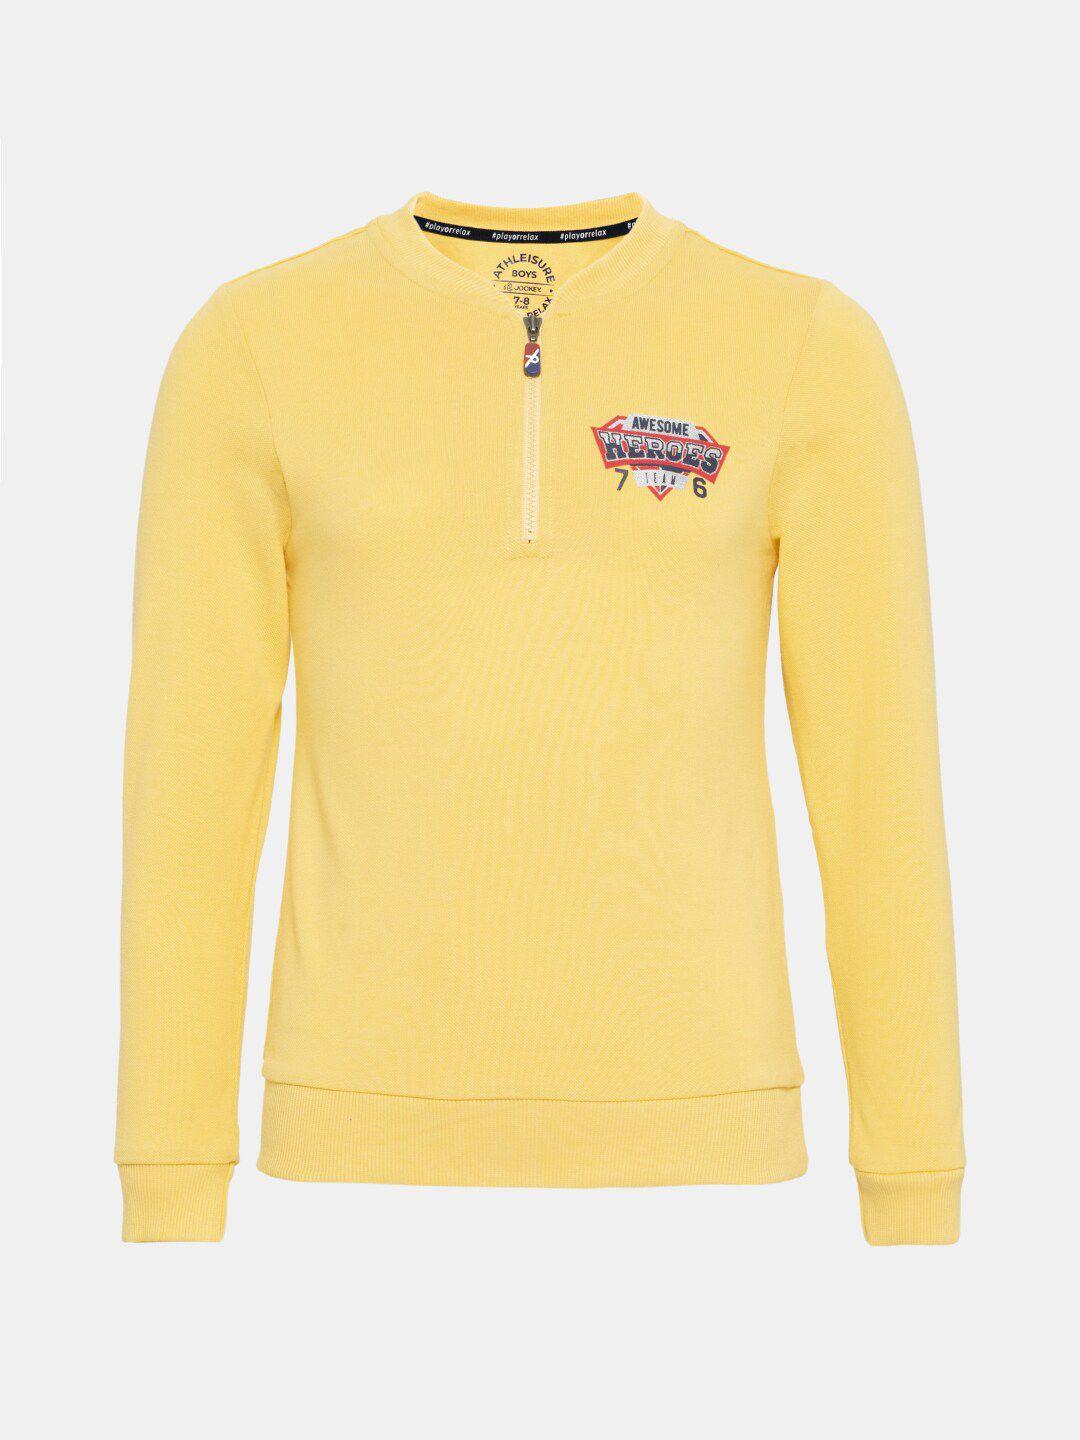 jockey-boys-yellow-sweatshirt